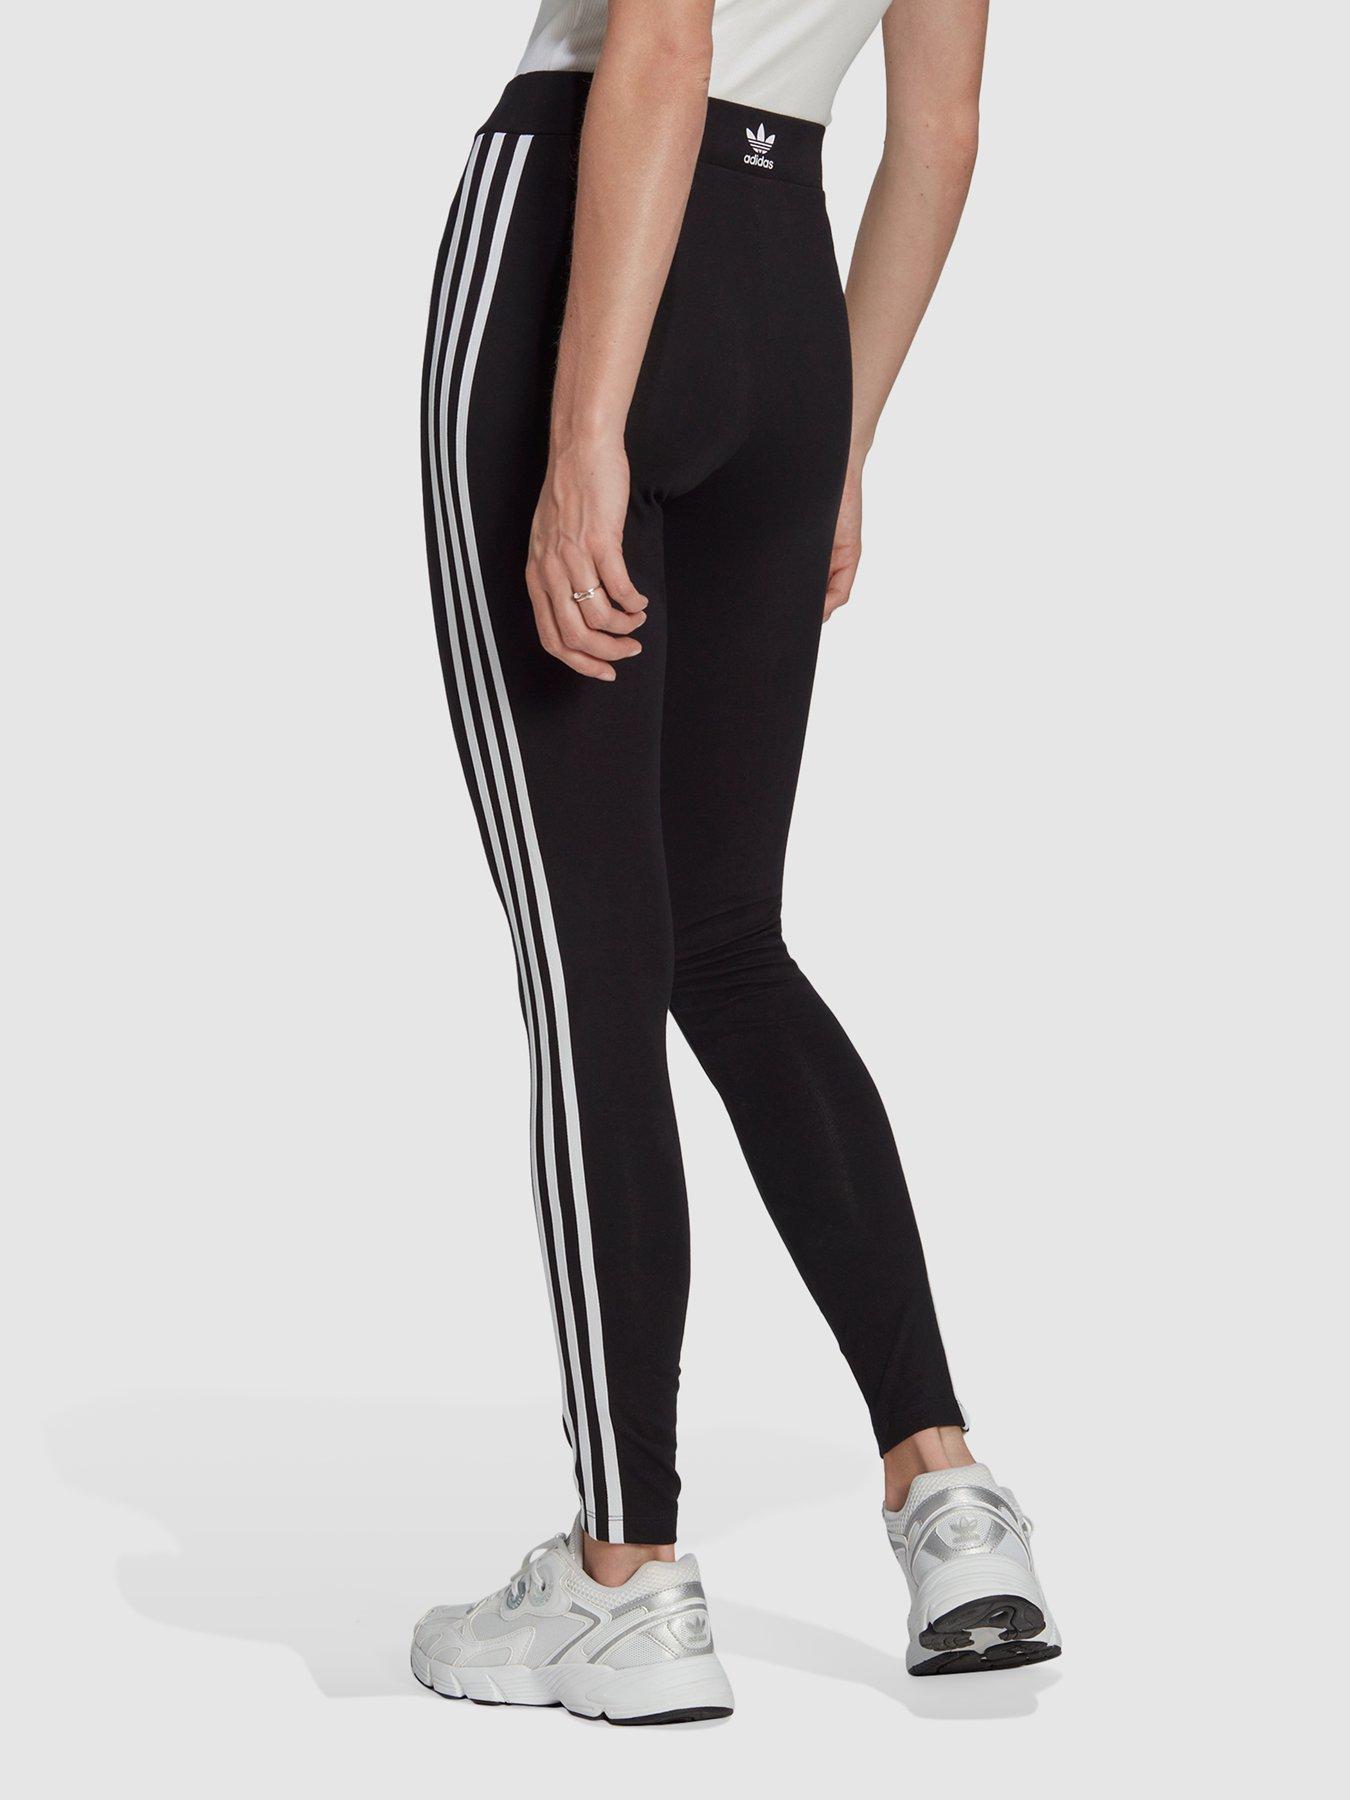 Tek Gear Girl's Leggings Large 10-12 Black Multi Colored Striped Active Wear